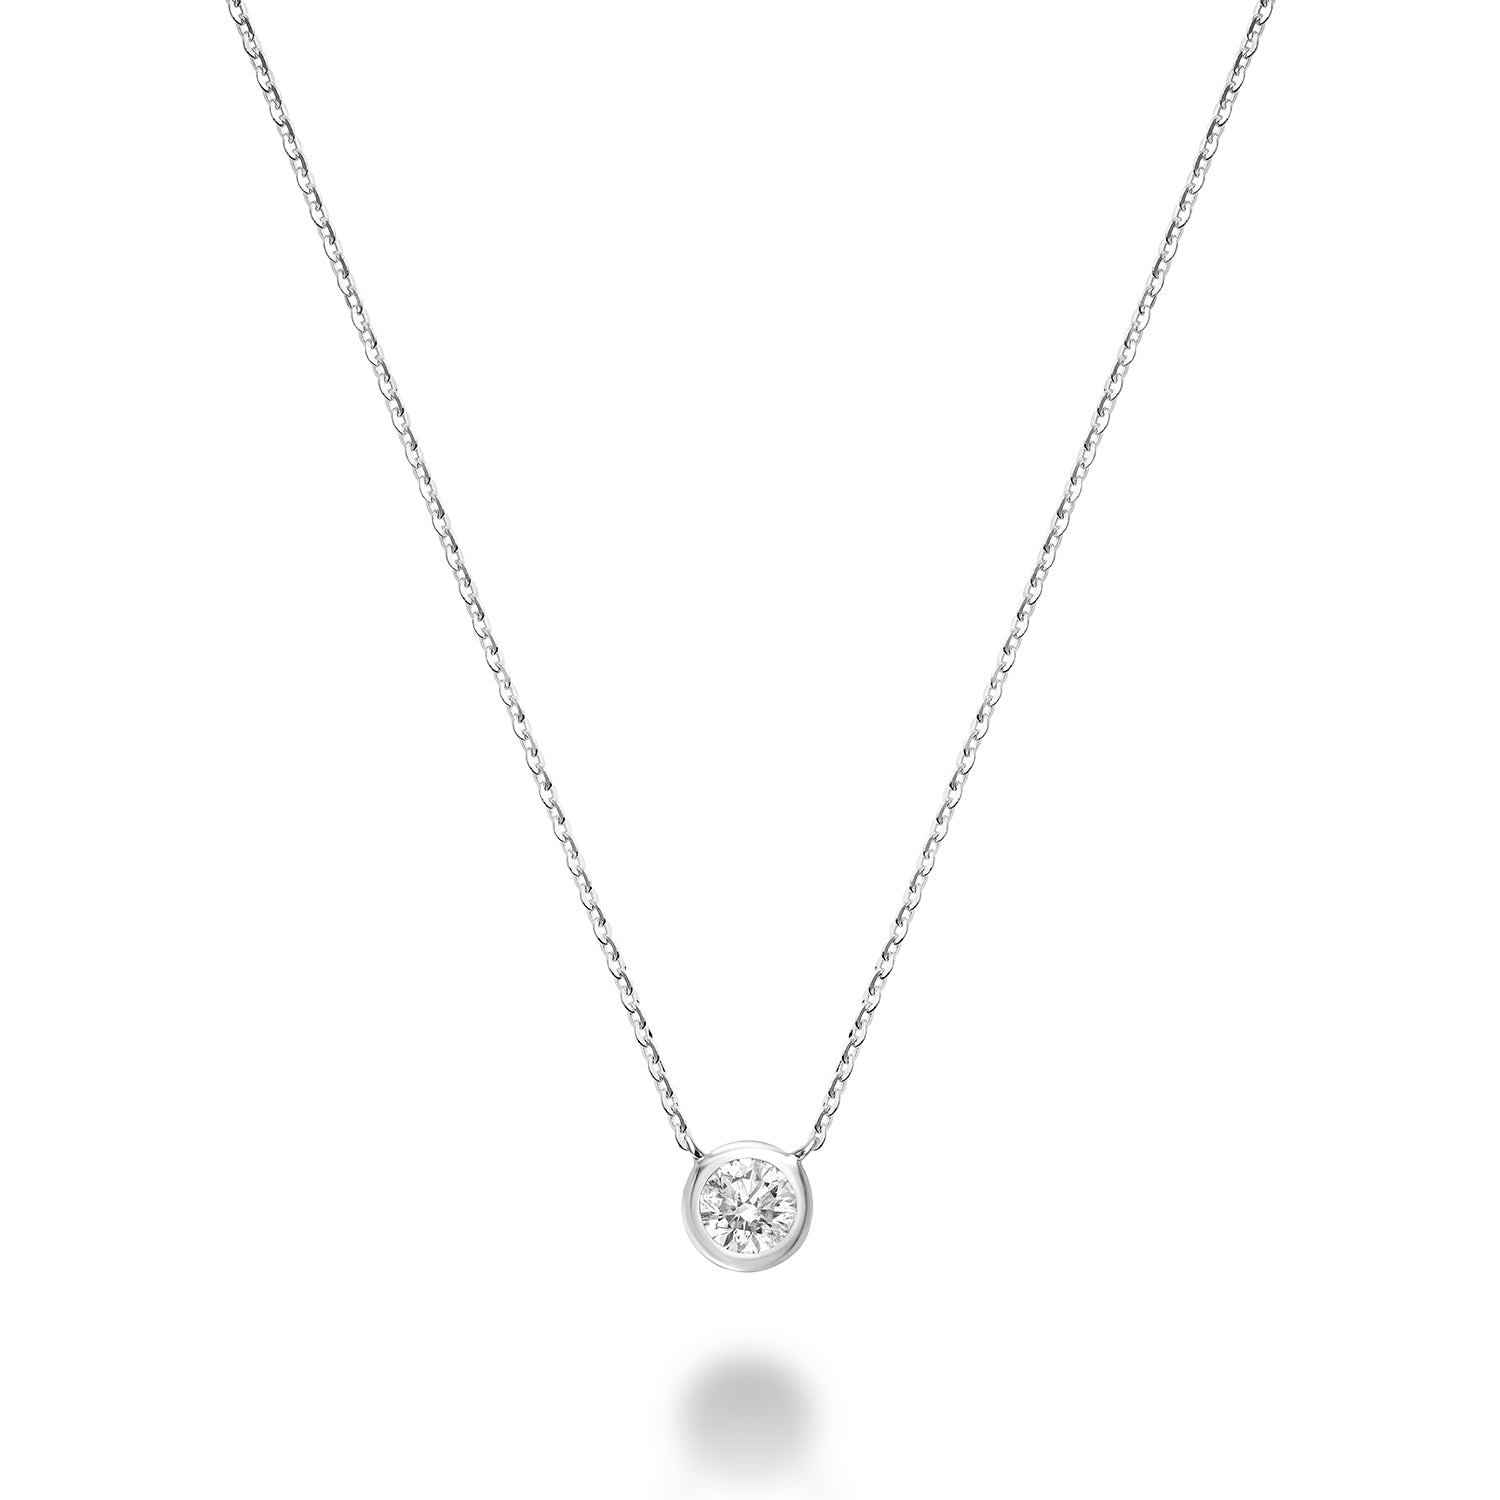 Elegant Diamond Bezel Necklace in White Gold | Radiant Brilliant-Cut Diamond